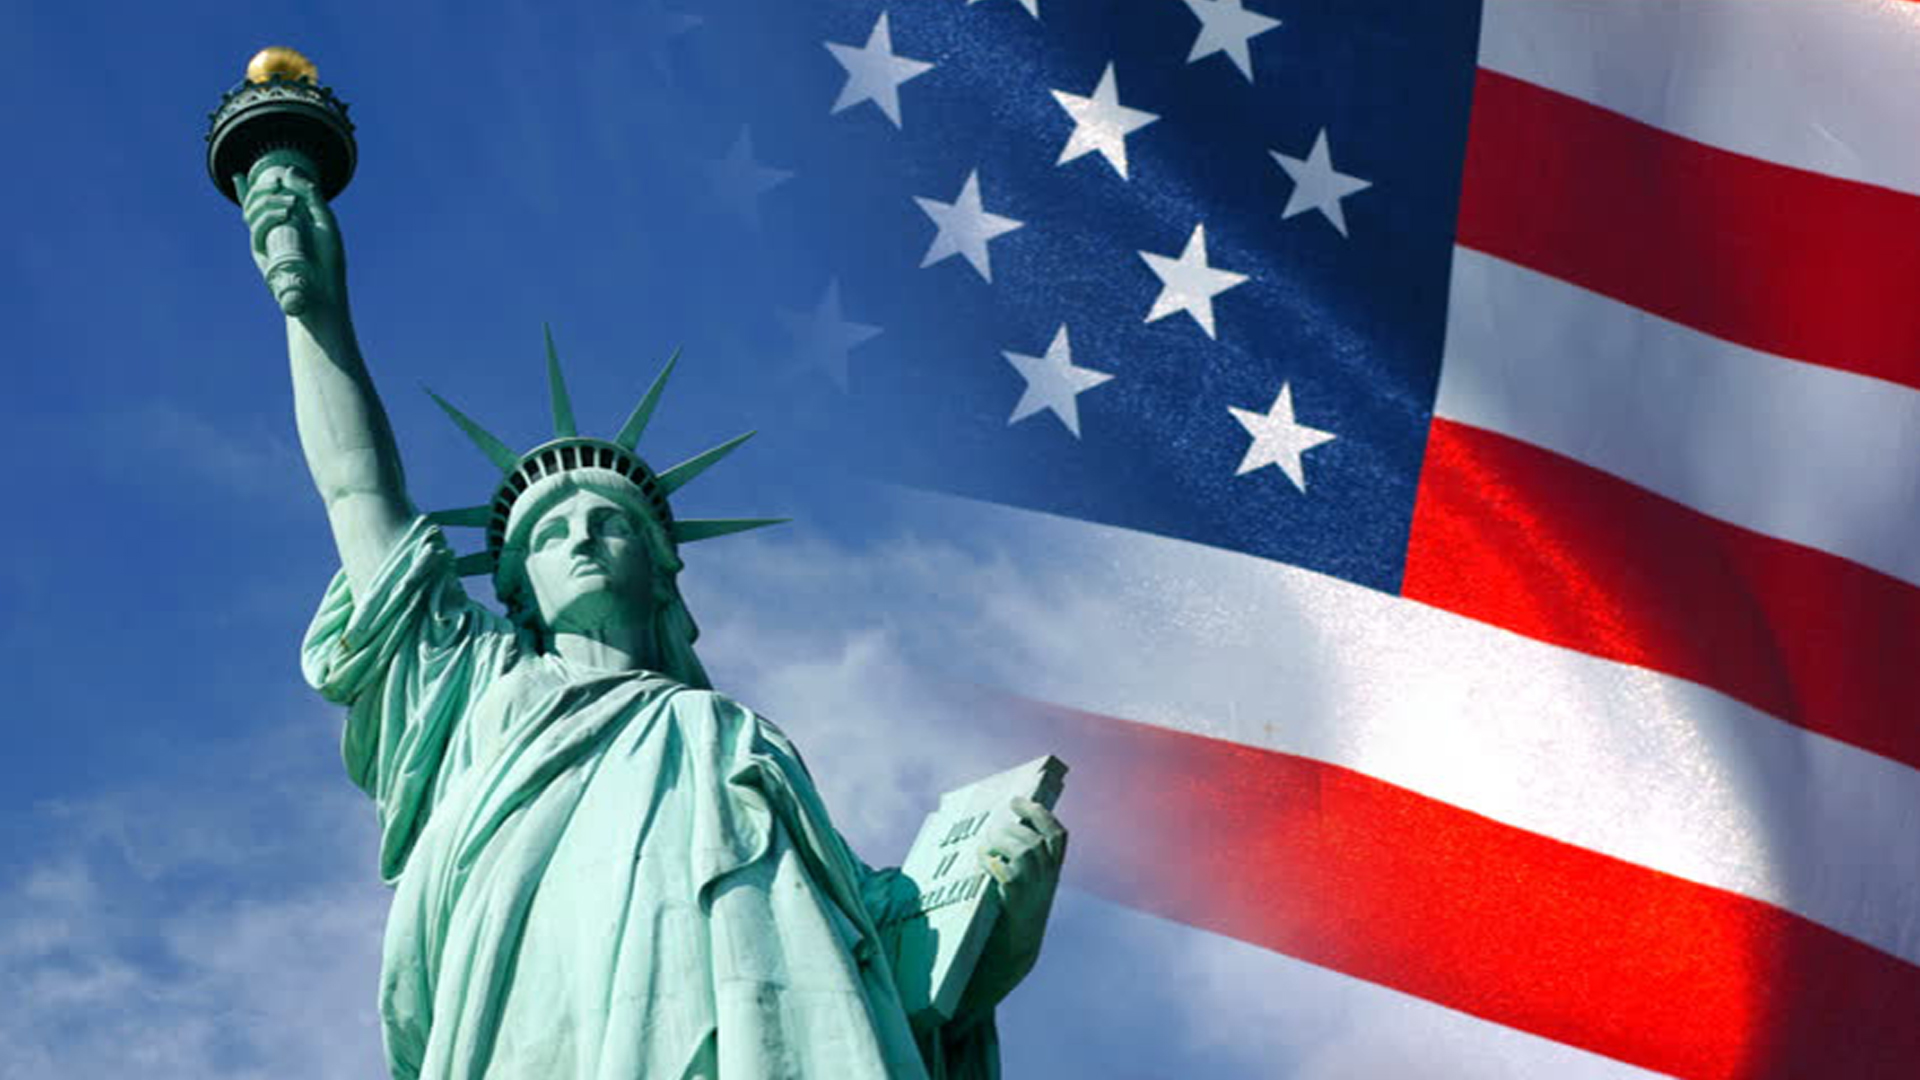 General countries. USA статуя свободы. Страна США. Американский флаг и статуя свободы. США картинки.